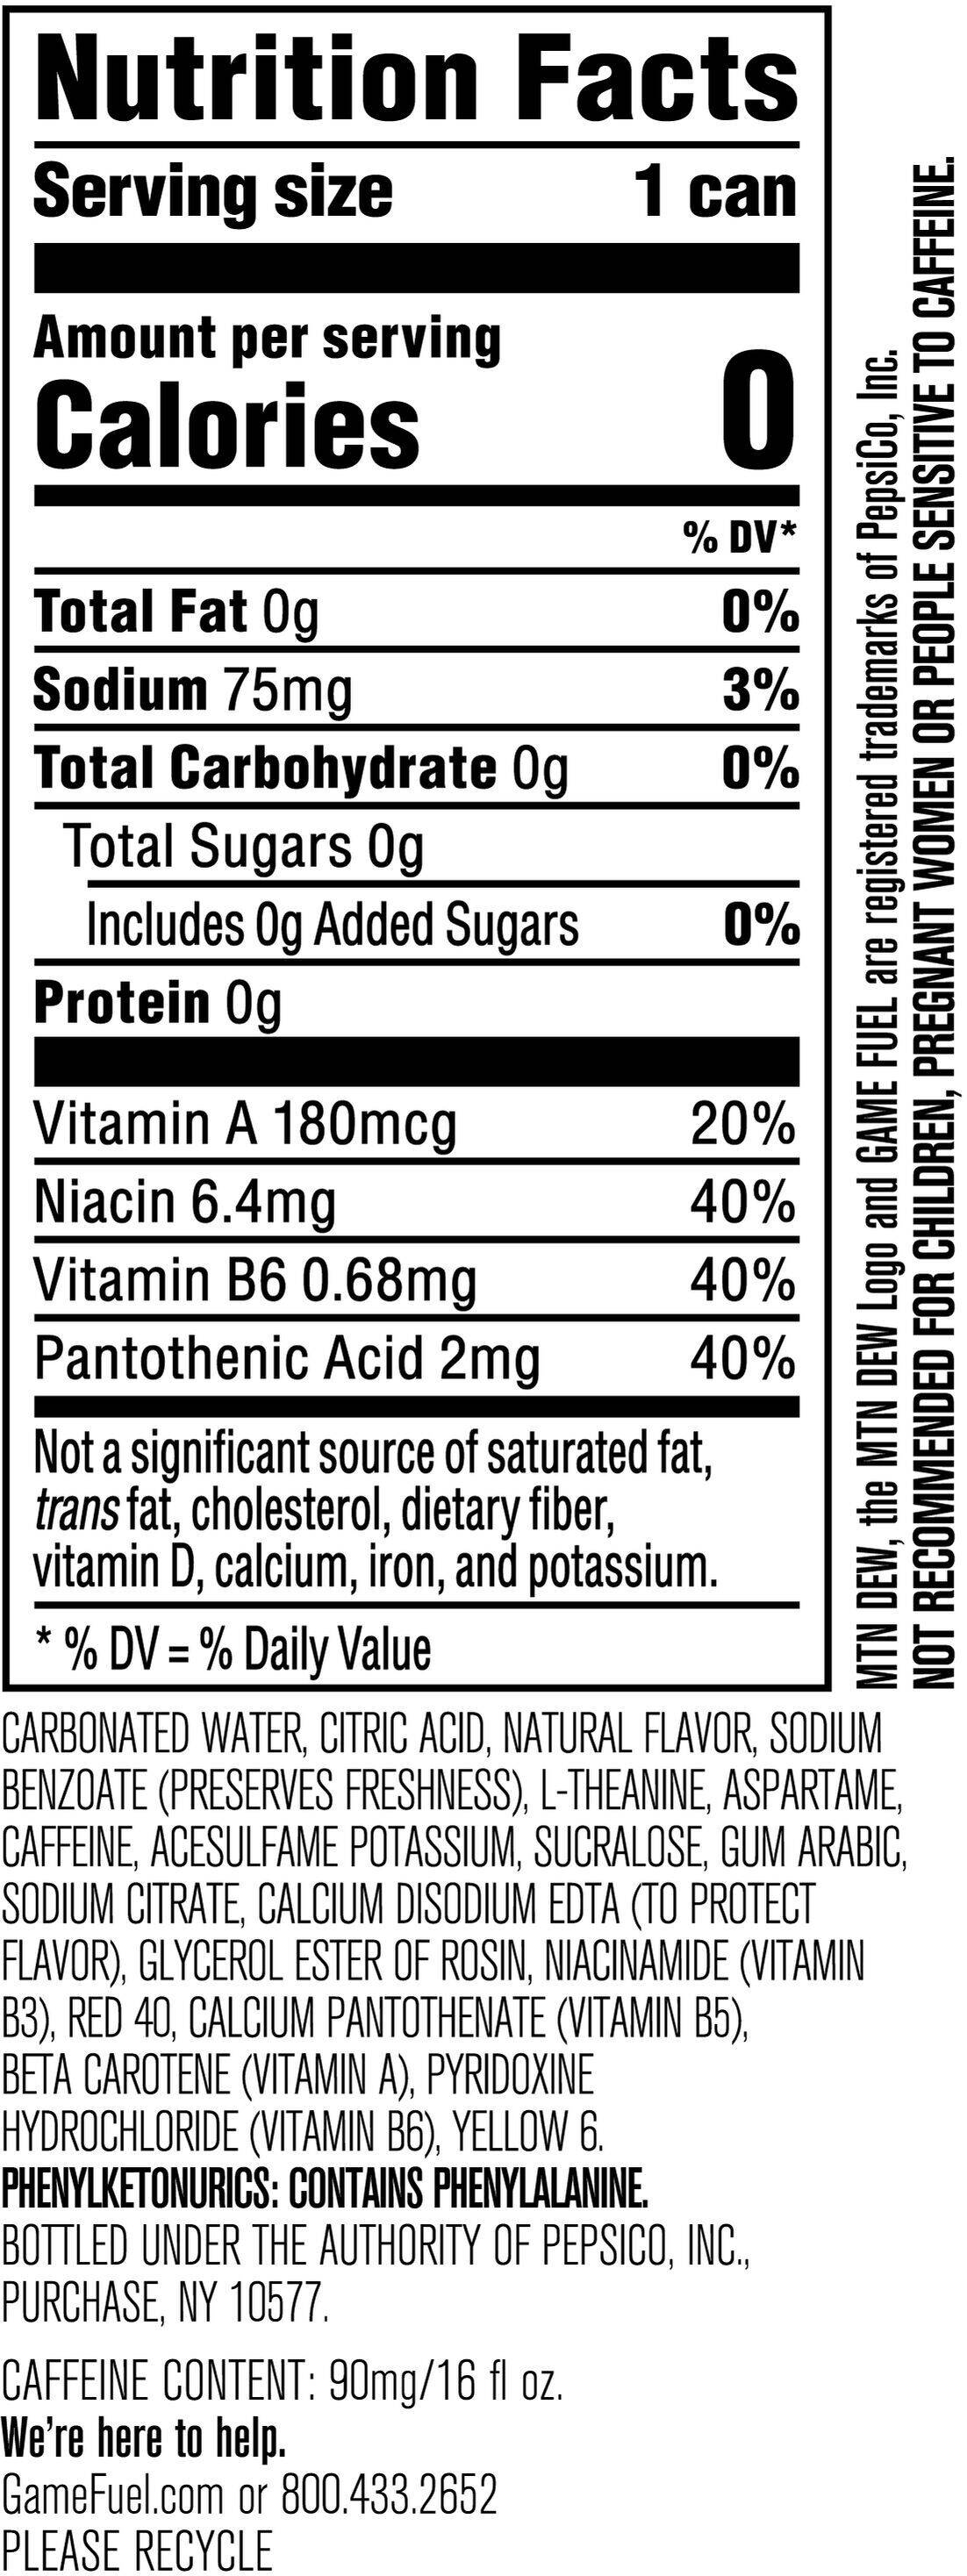 Image describing nutrition information for product Mtn Dew Game Fuel Zero Watermelon Shock